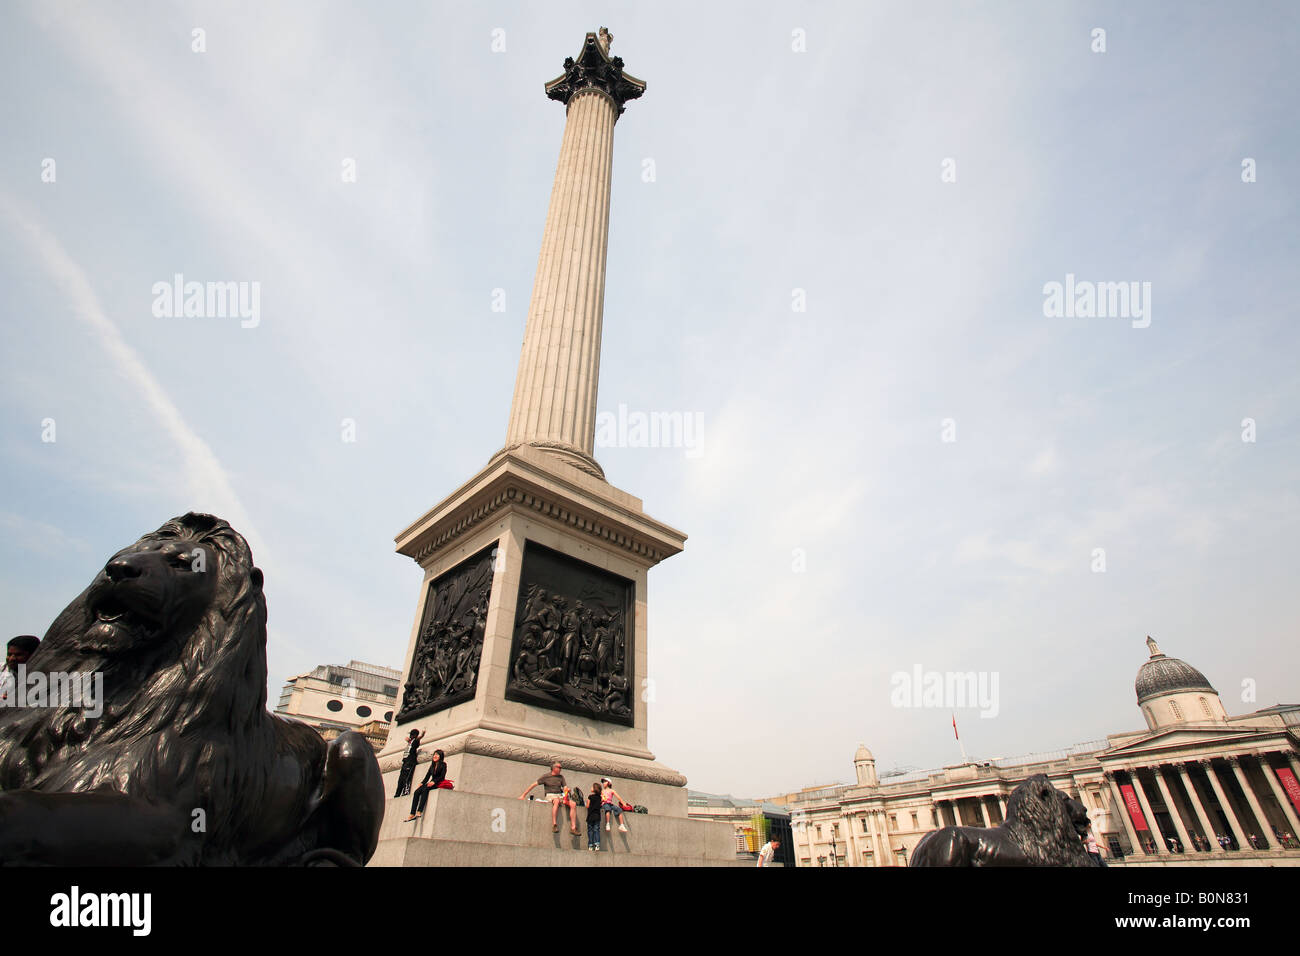 europe london trafalgar square and nelson's column Stock Photo